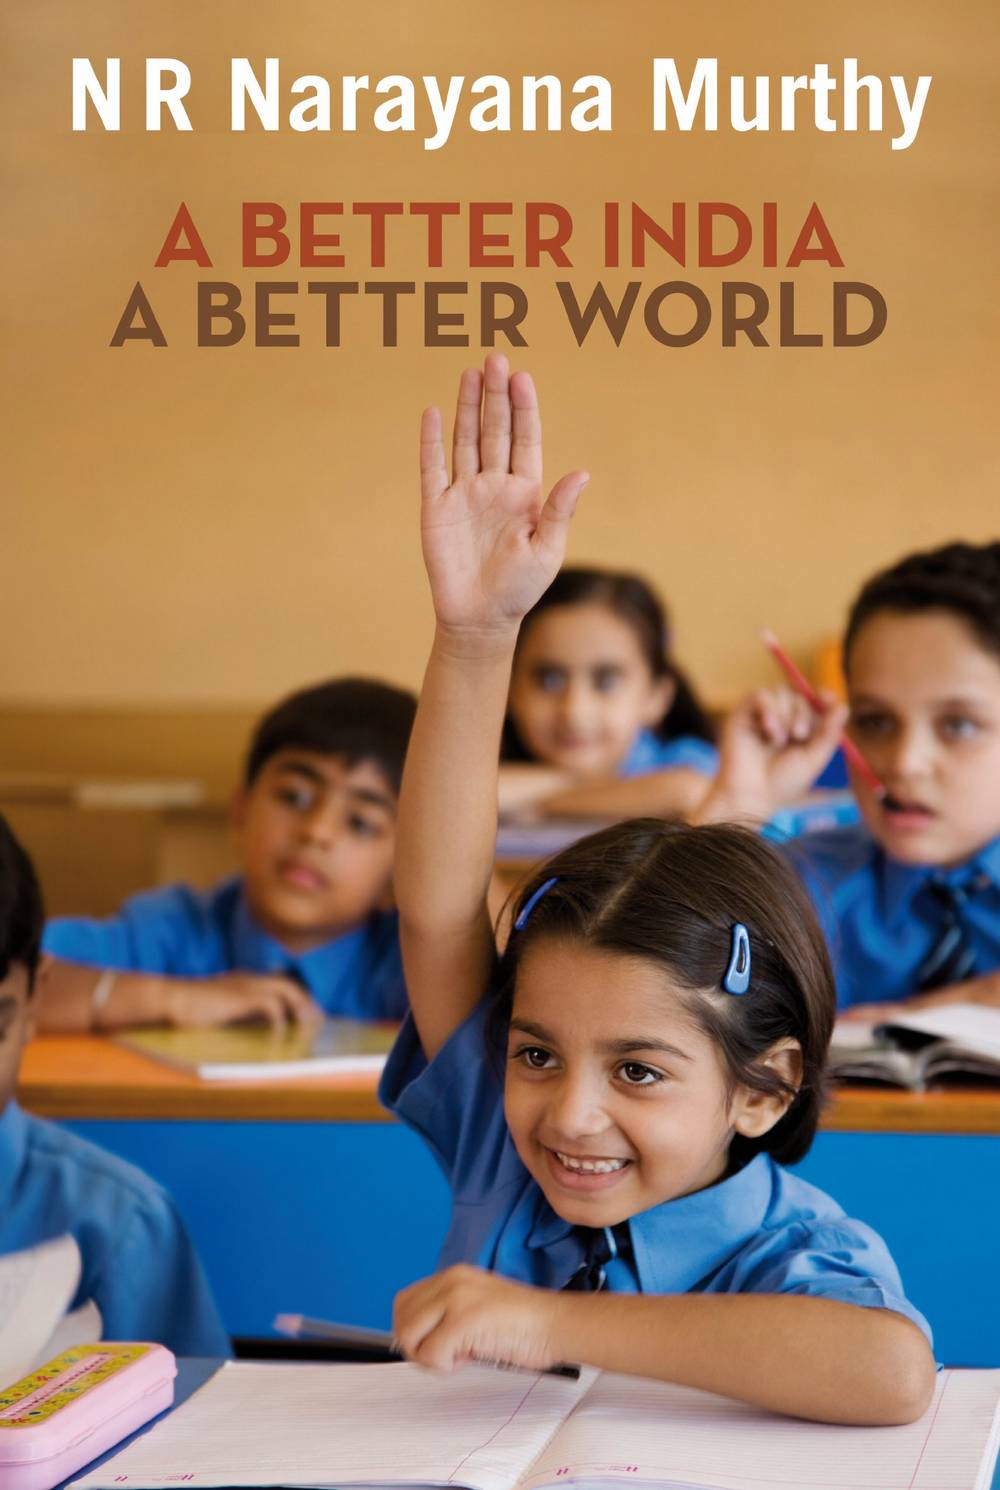 'Better India: A Better World' by N.R. Narayana Murthy (ISBN 0143068571)